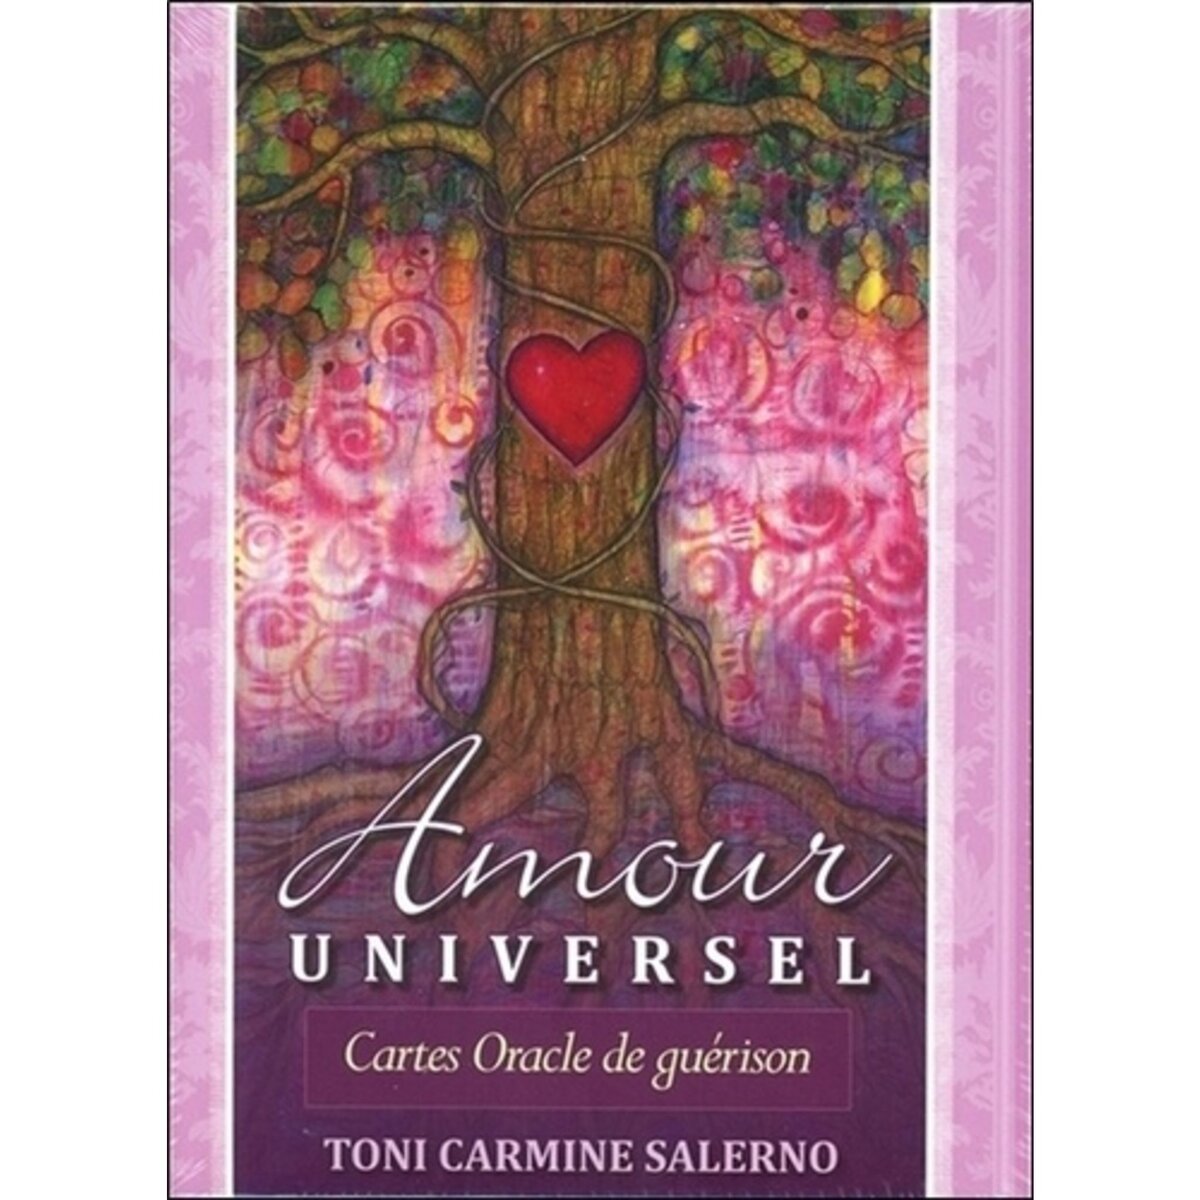  AMOUR UNIVERSEL. CARTES ORACLE DE GUERISON, Salerno Toni Carmine